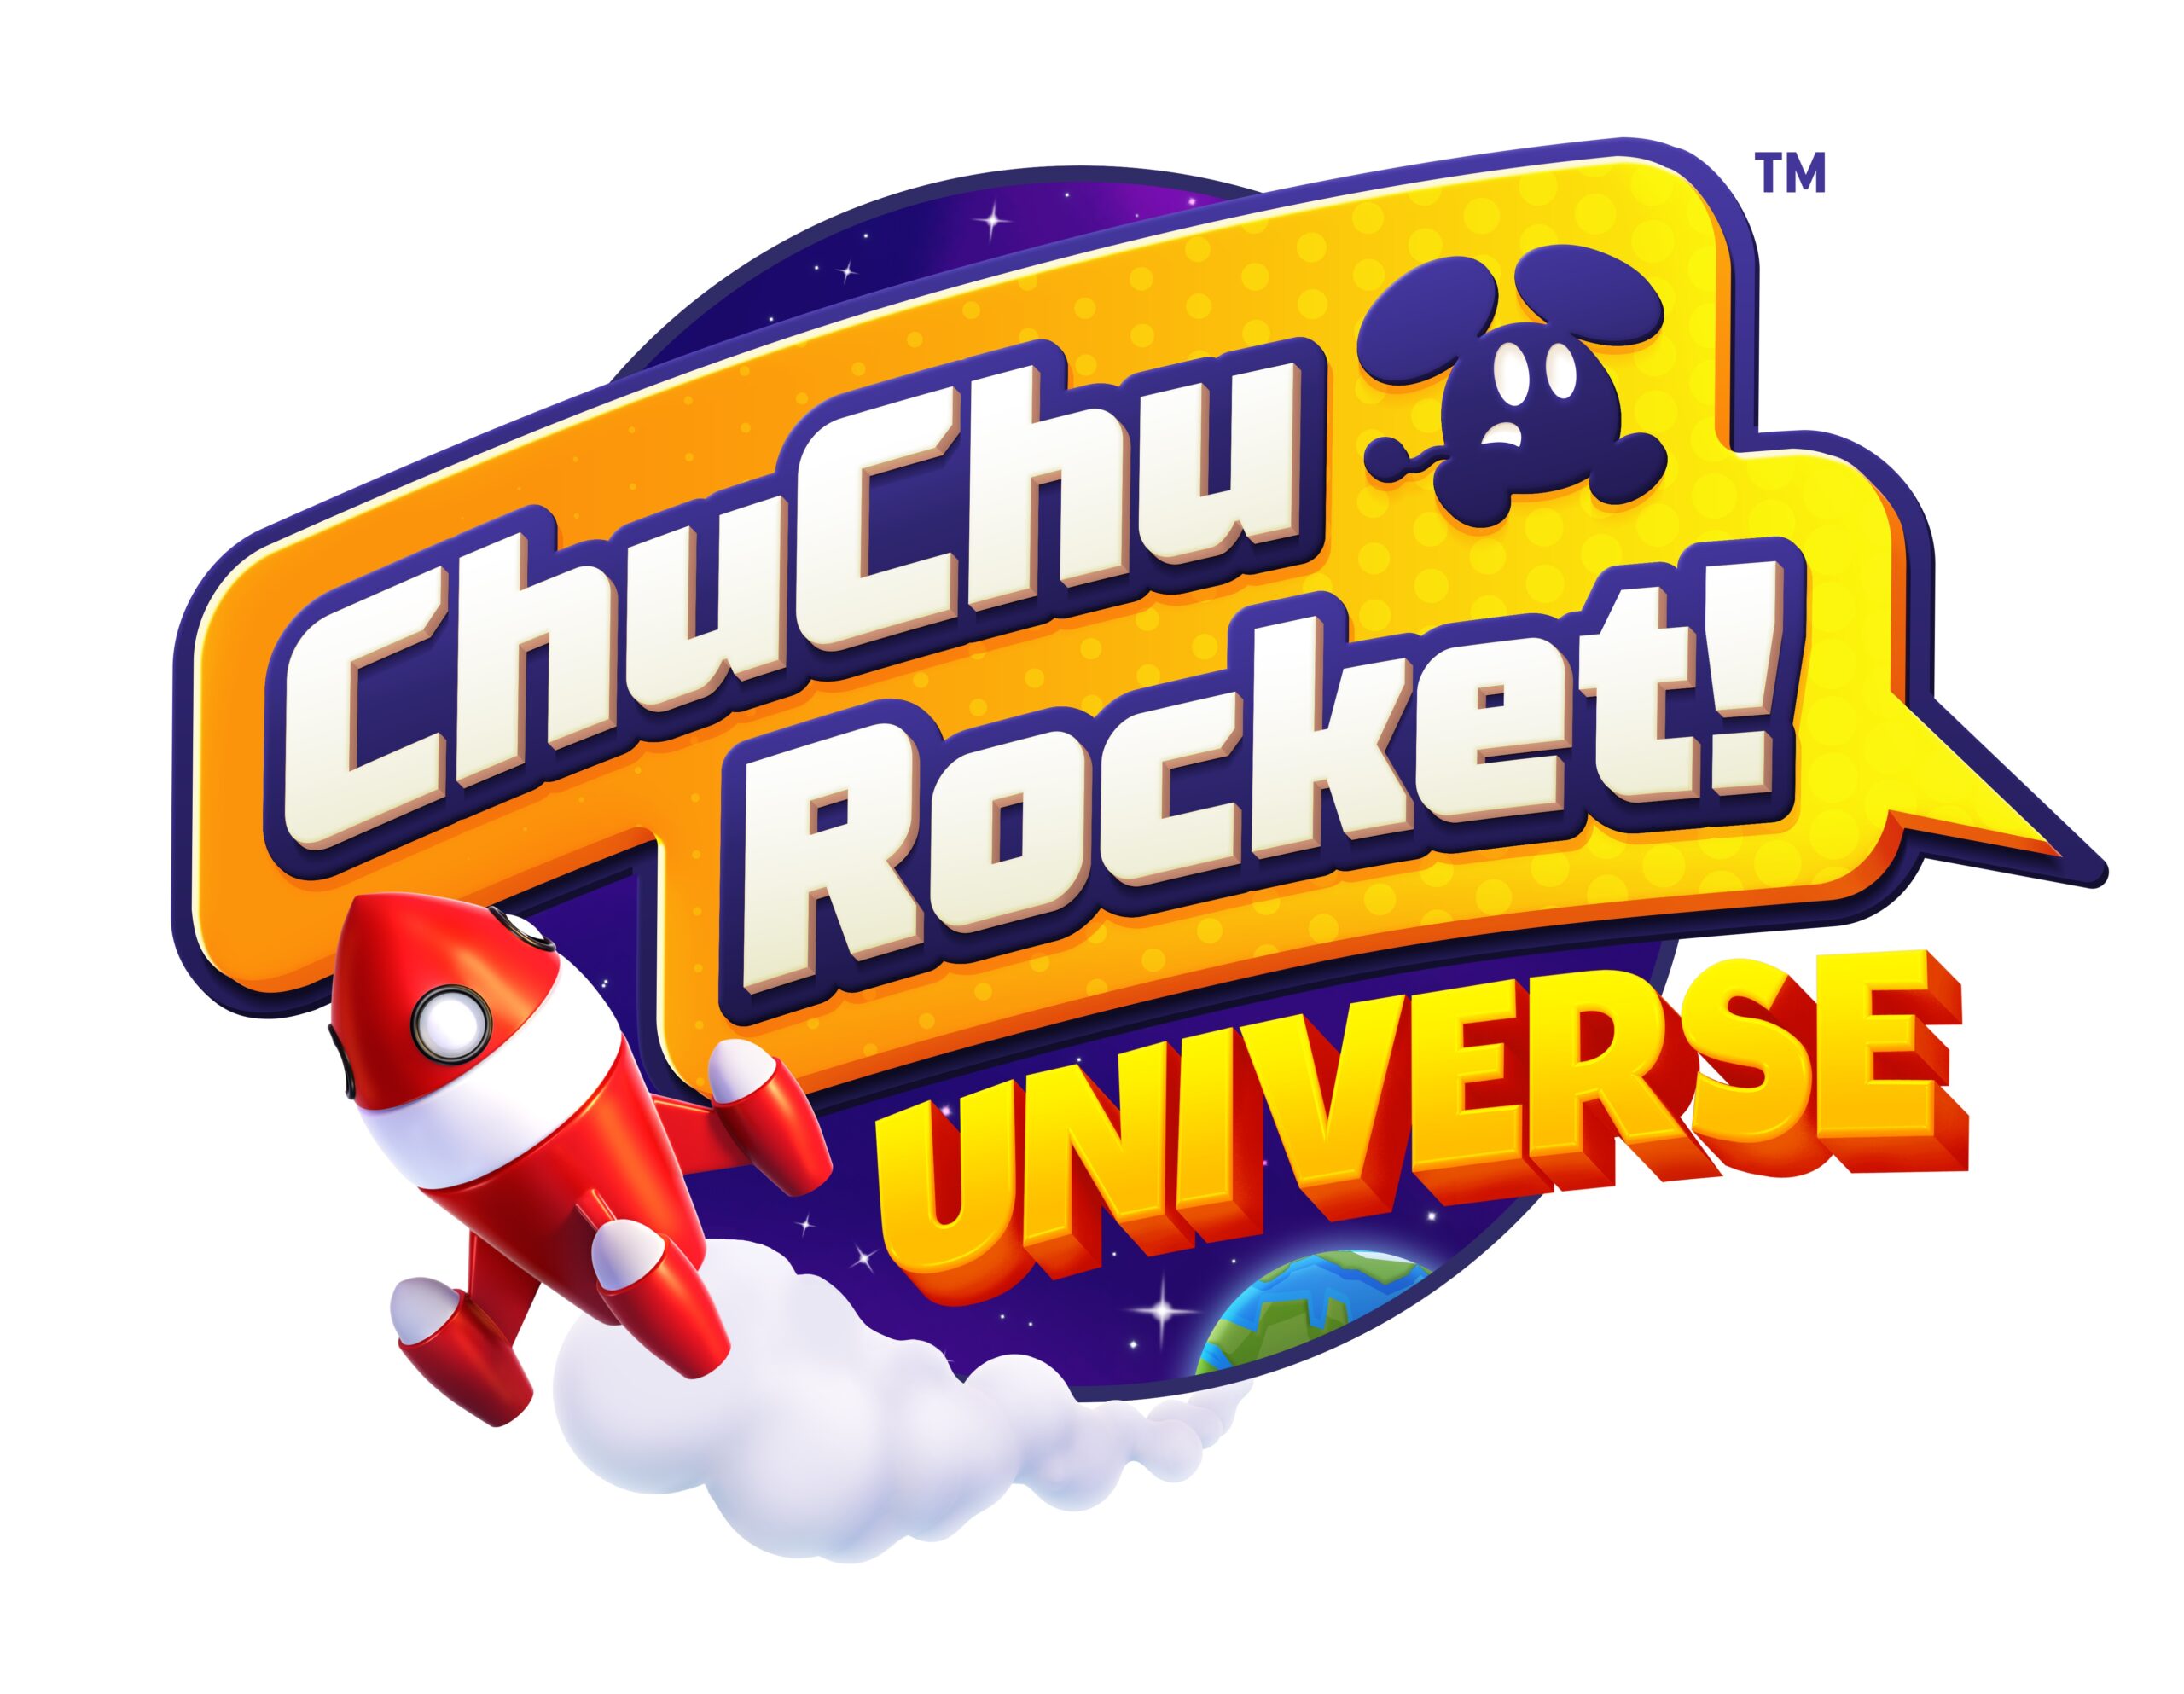 chuchu rocket universe